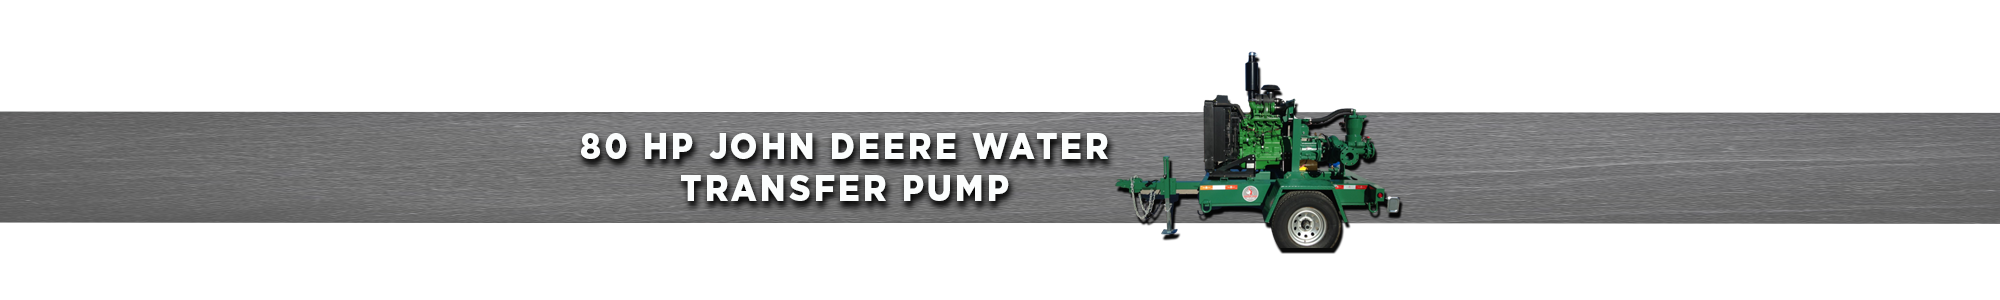 80 HP John Deere Water Transfer Pump